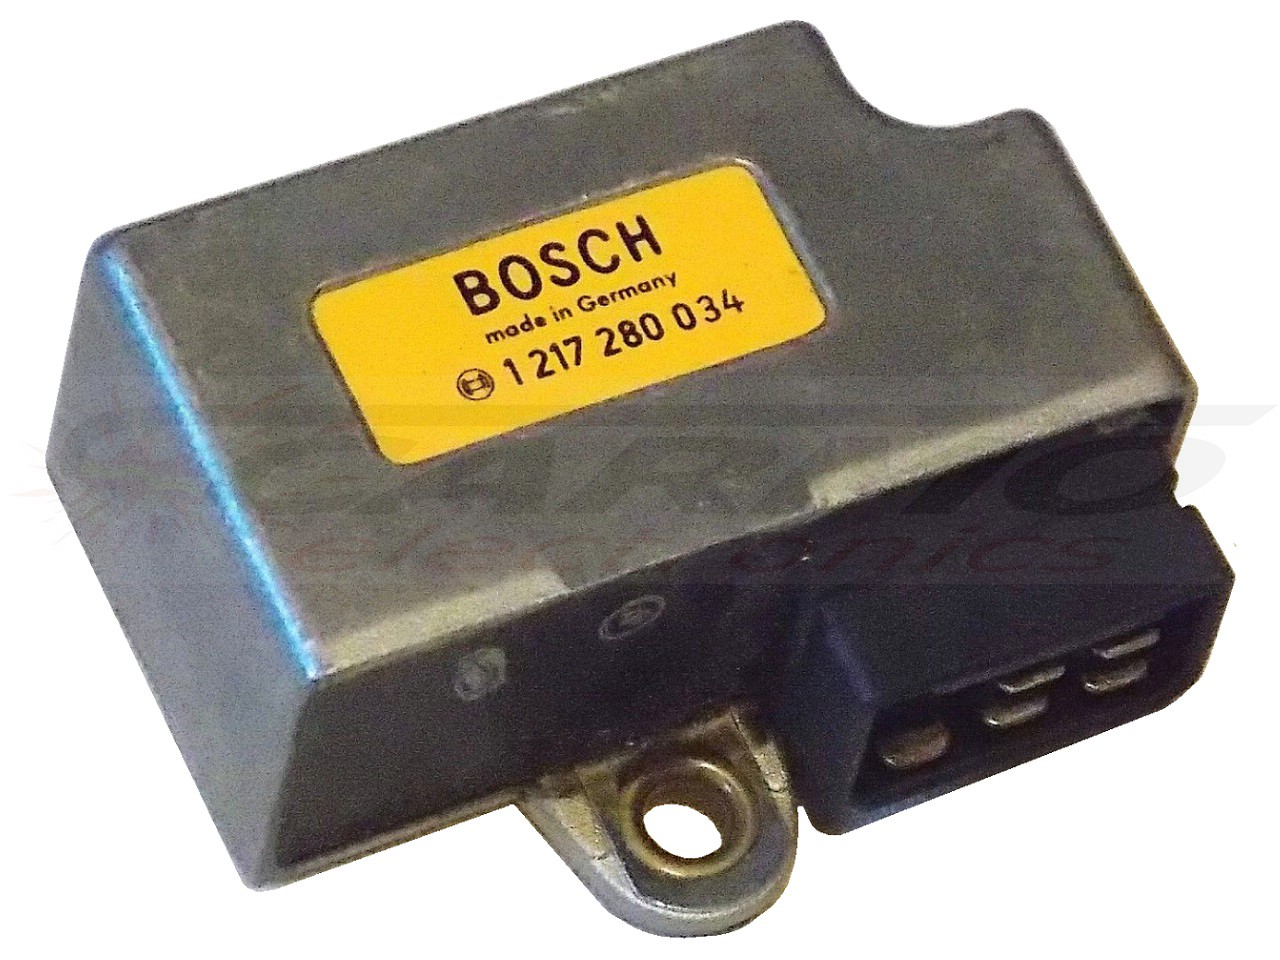 Laverda Jota 1000 TCI CDI unidad de control (Bosch, 1 217 280 034)